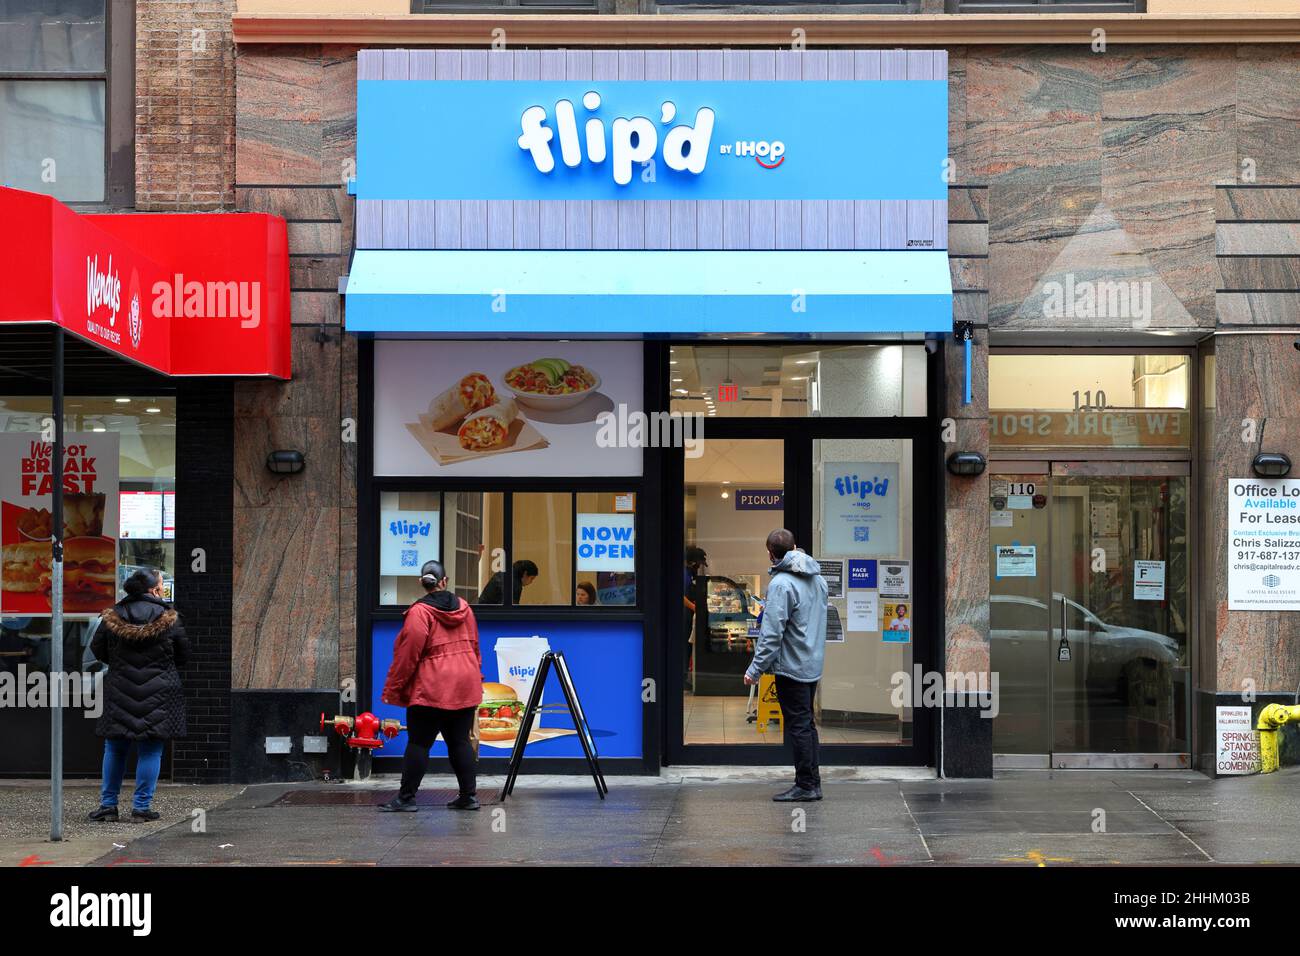 Flip'd by IHOP Presents Plant Based Sandwich at Flatiron Location